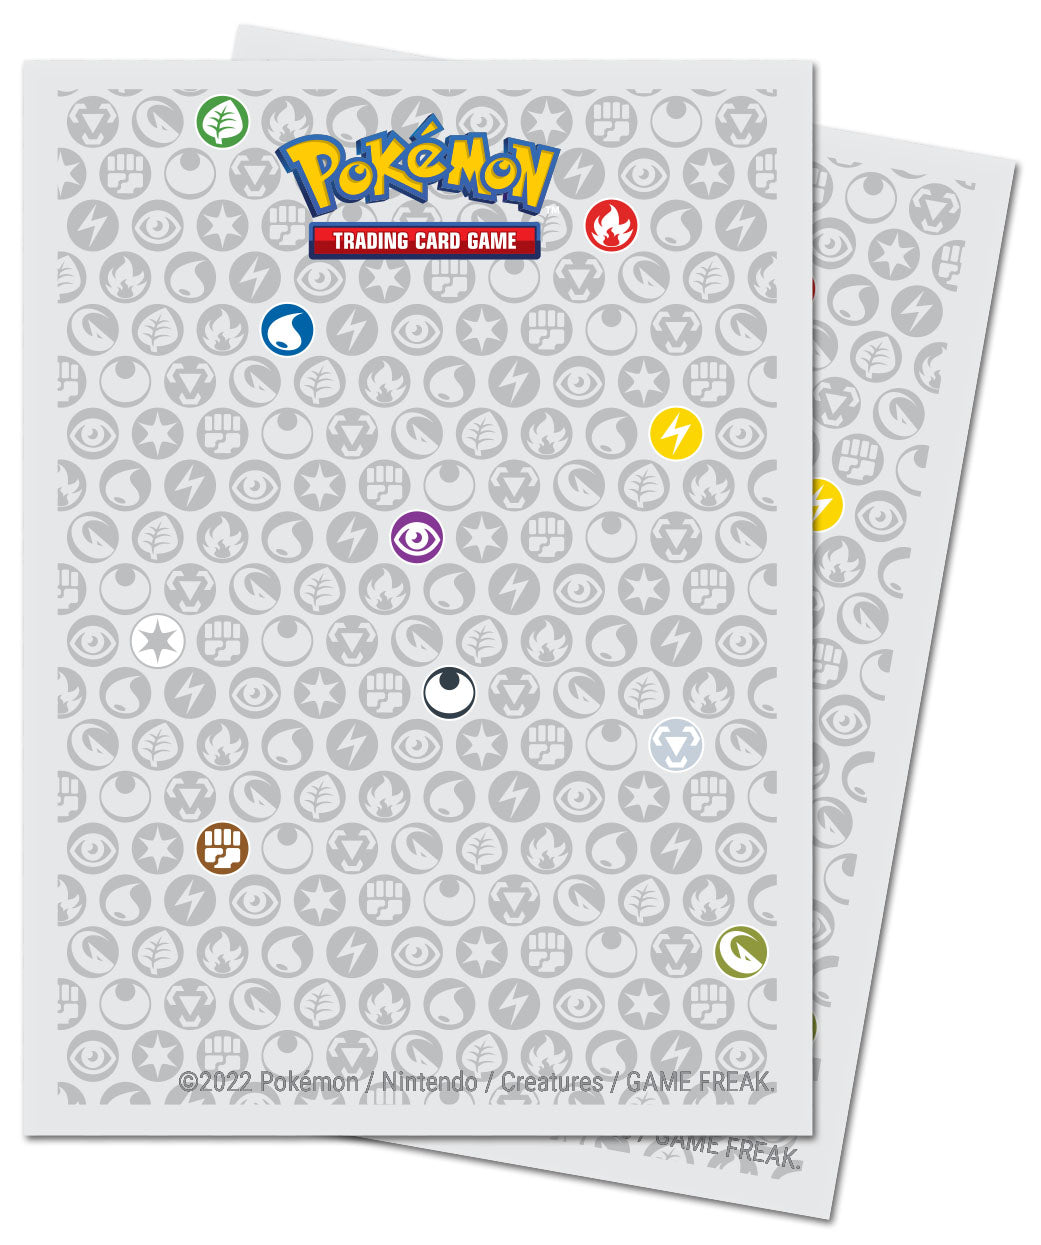 Pokemon UP  First Partner Accessories Bundle Box (Pre-Order) - Miraj Trading